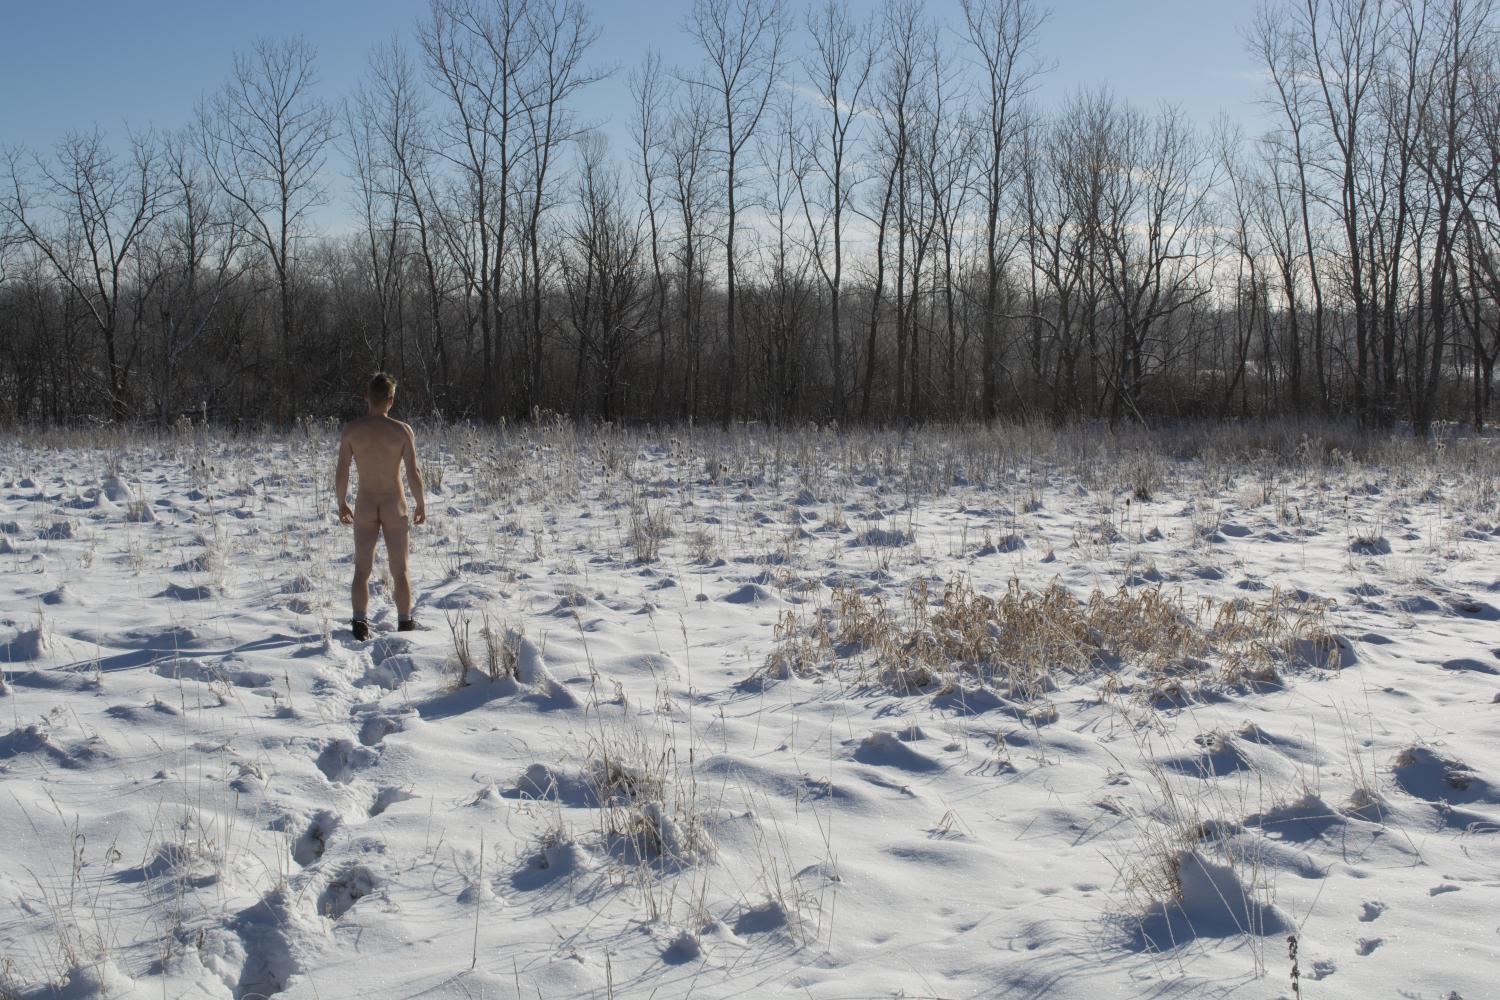 Nude in winter